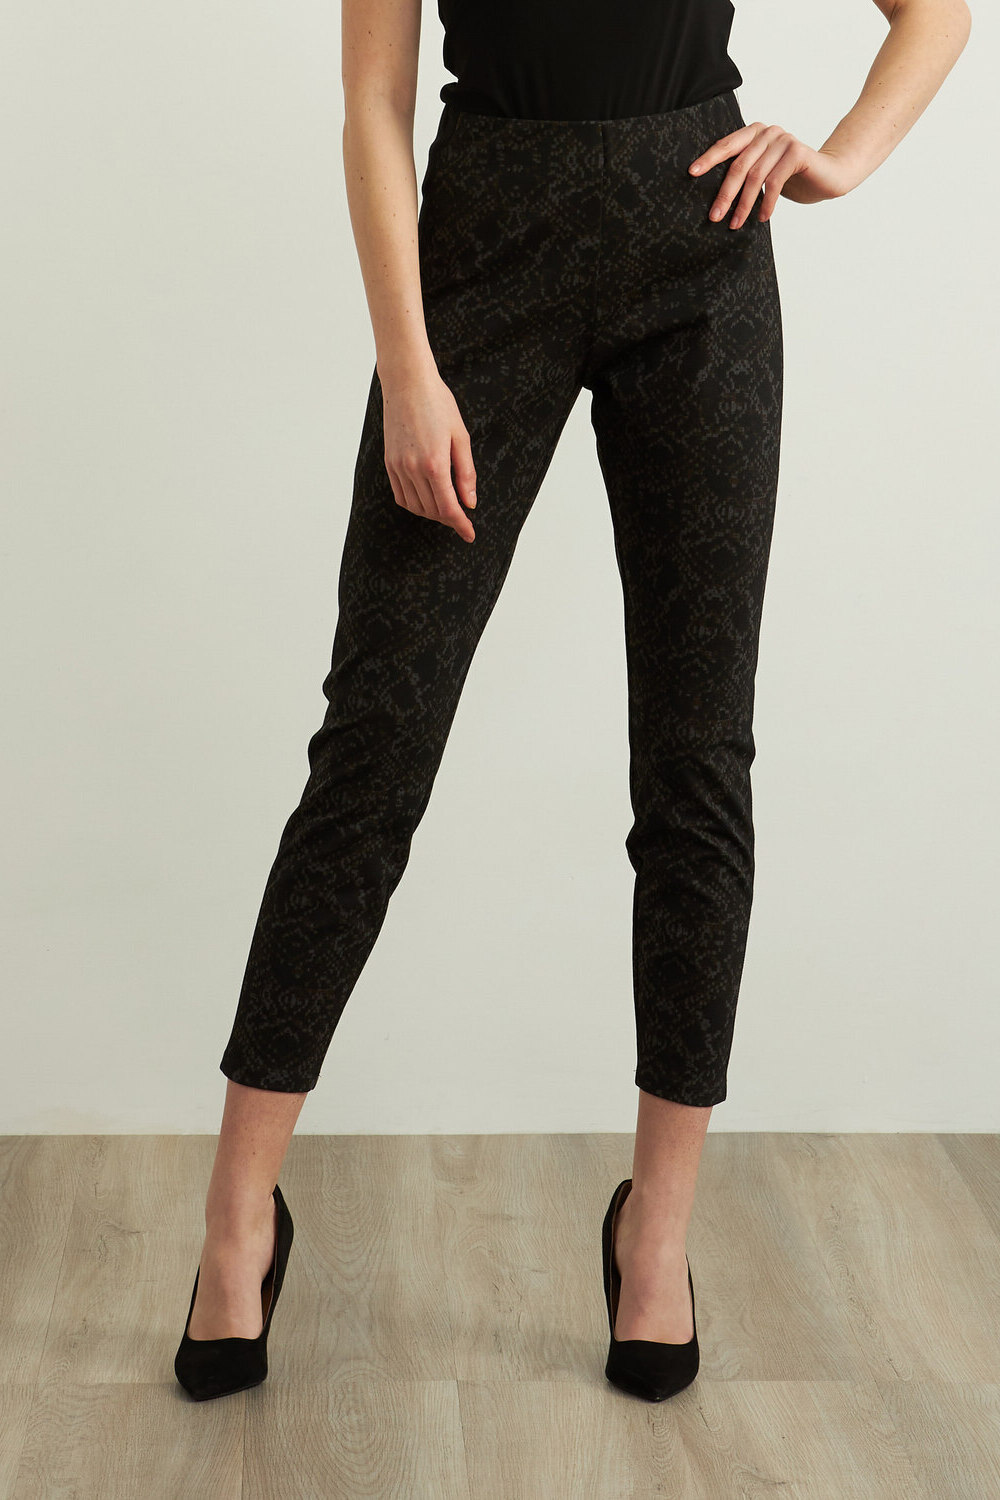 Joseph Ribkoff Solid Stripe Pants Style 213053. Black/brown/grey